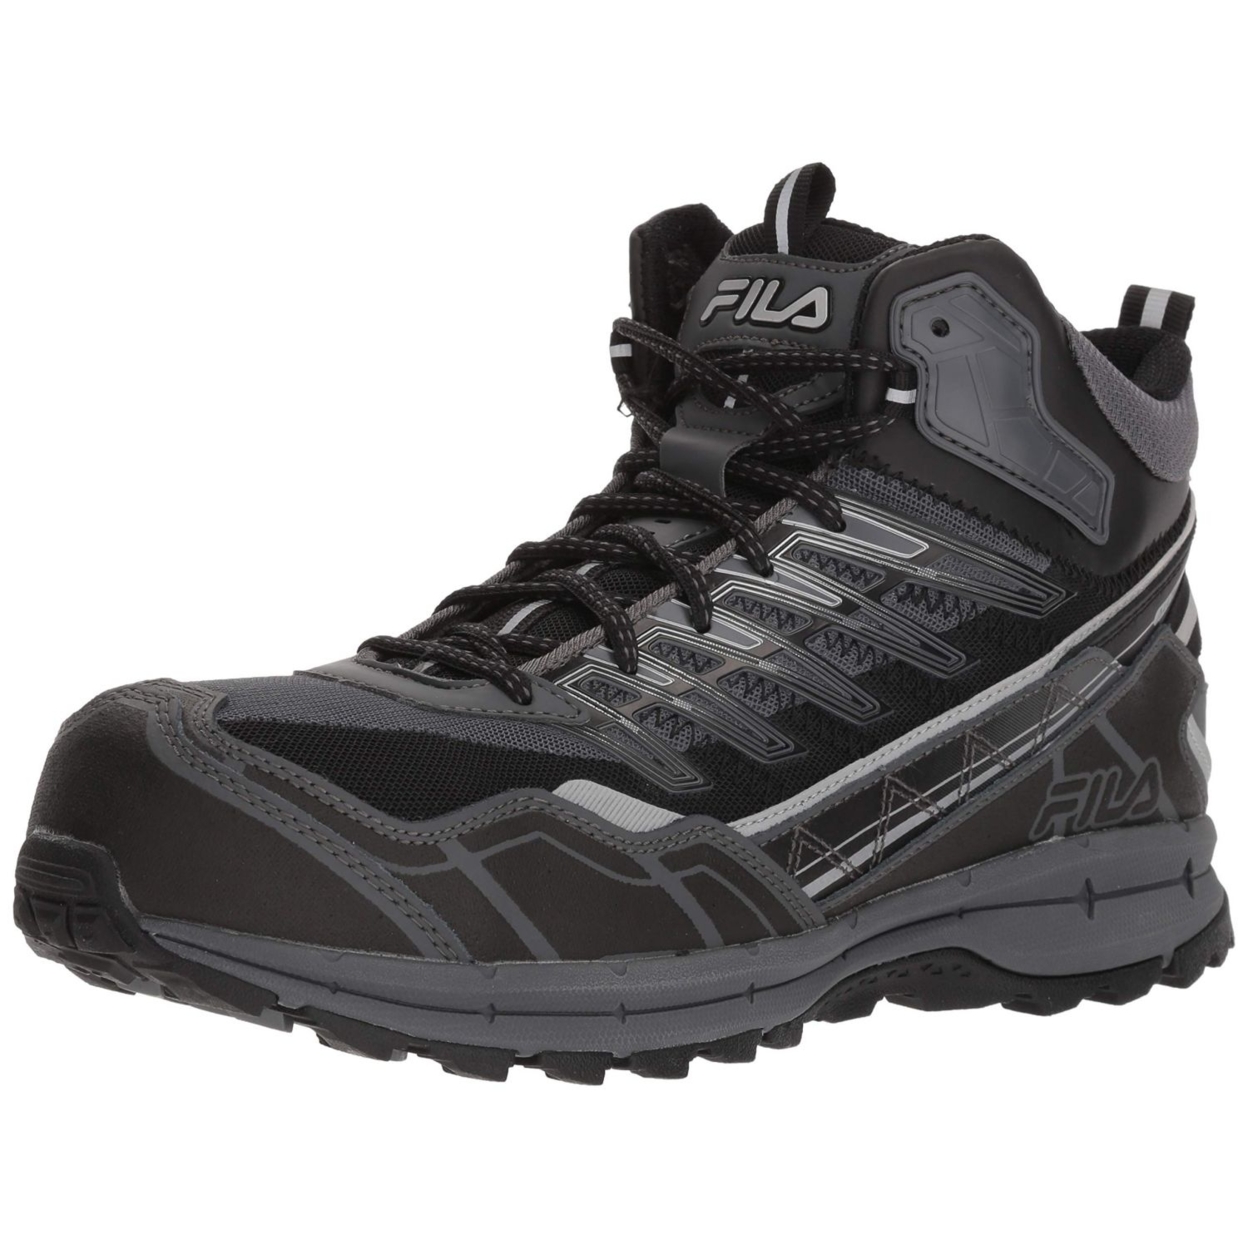 Fila Men's Hail Storm 3 Mid Composite Toe Trail Work Shoes Ct CSRK/BLK/MSIL - CSRK/BLK/MSIL, 14